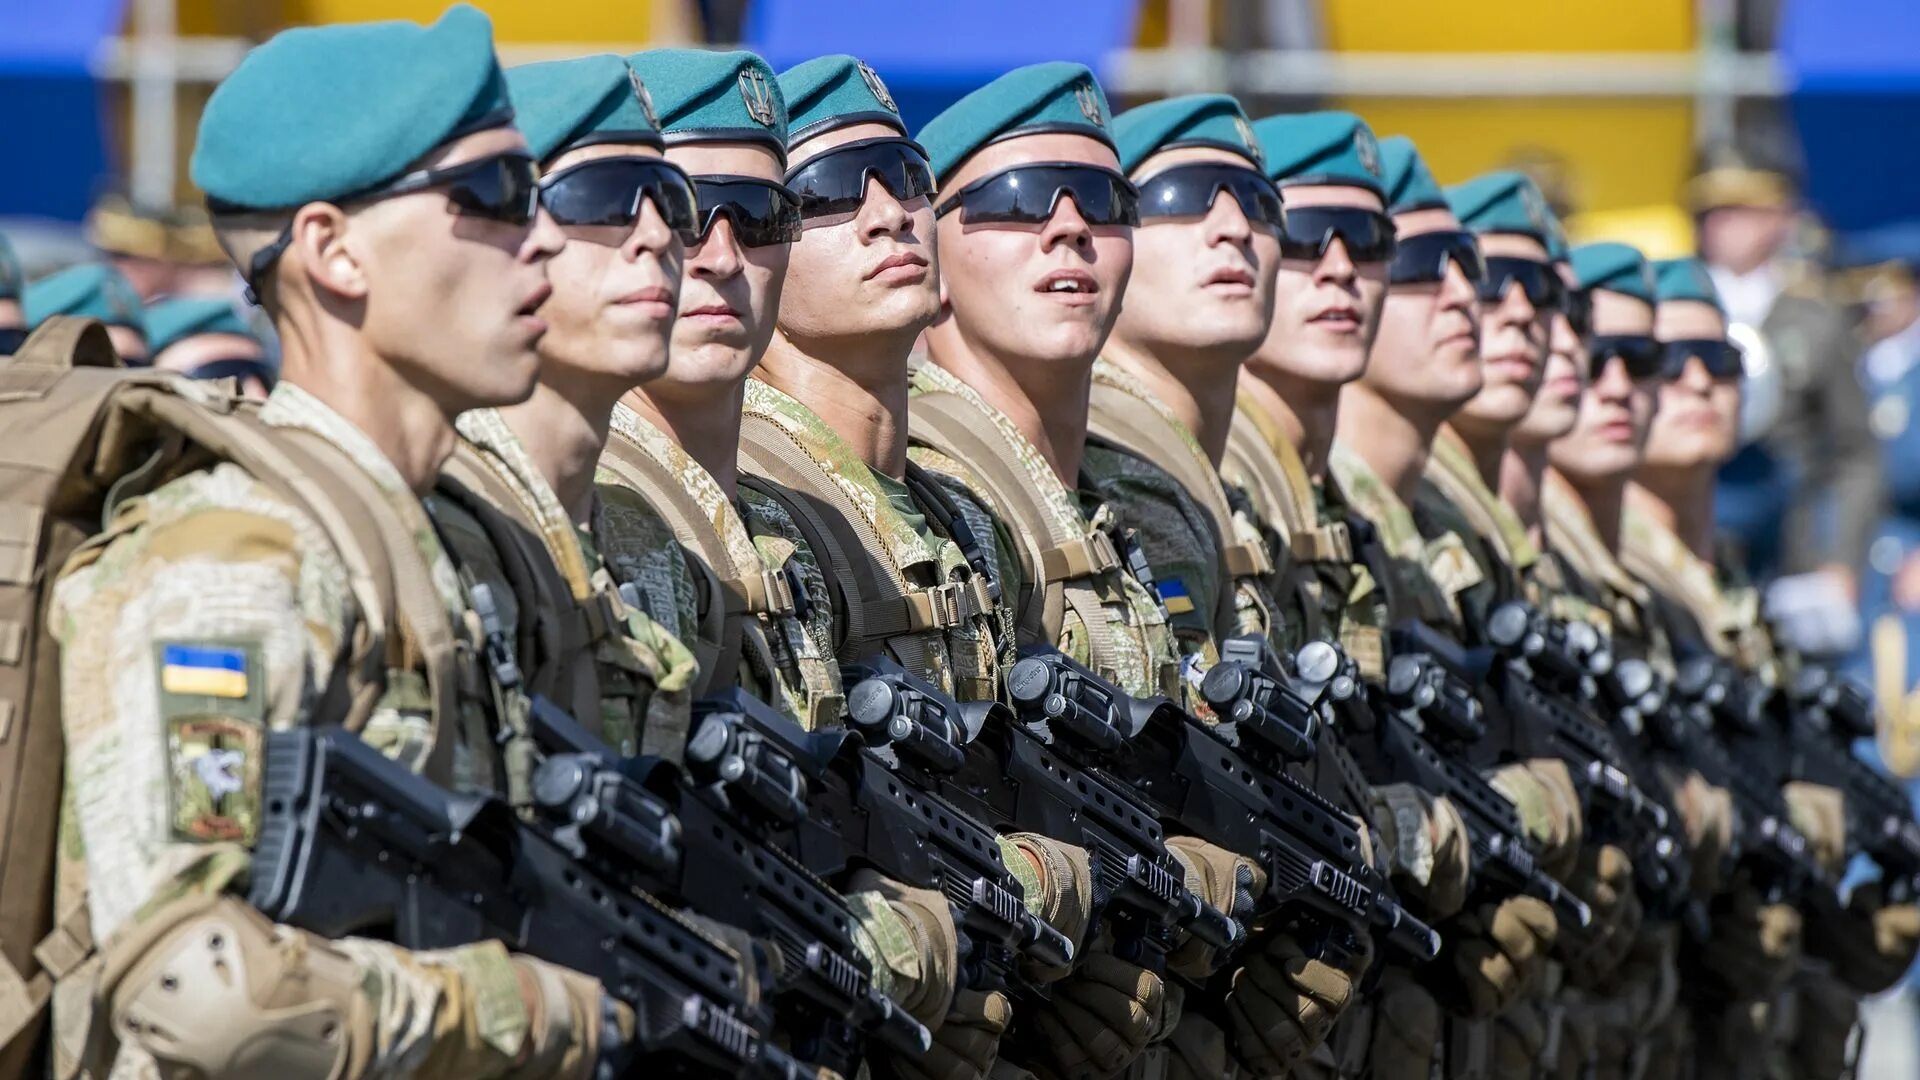 Сильная армия украины. Морская пехота ЗСУ. Украинская армия. Украинский военный парад. Украинские солдаты на параде.